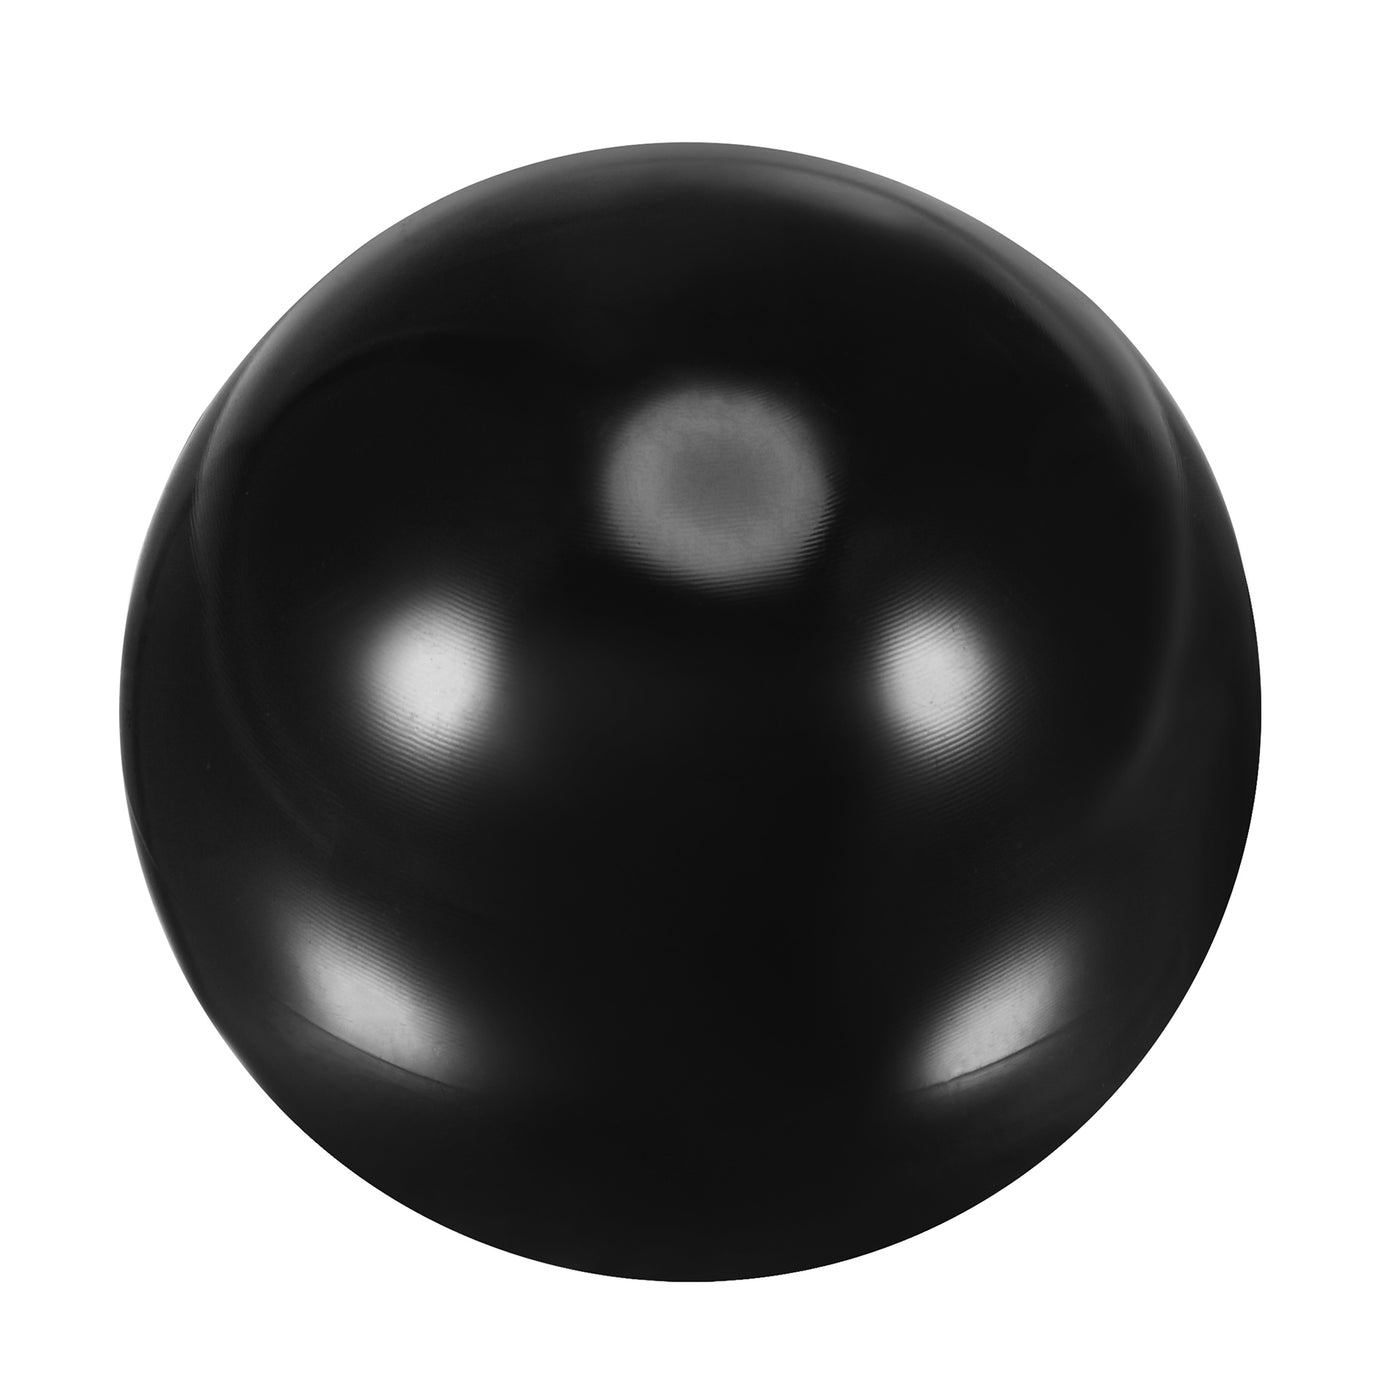 uxcell Uxcell Joystick Head Rocker Ball Top Handle Arcade Game Replacement Green/Black